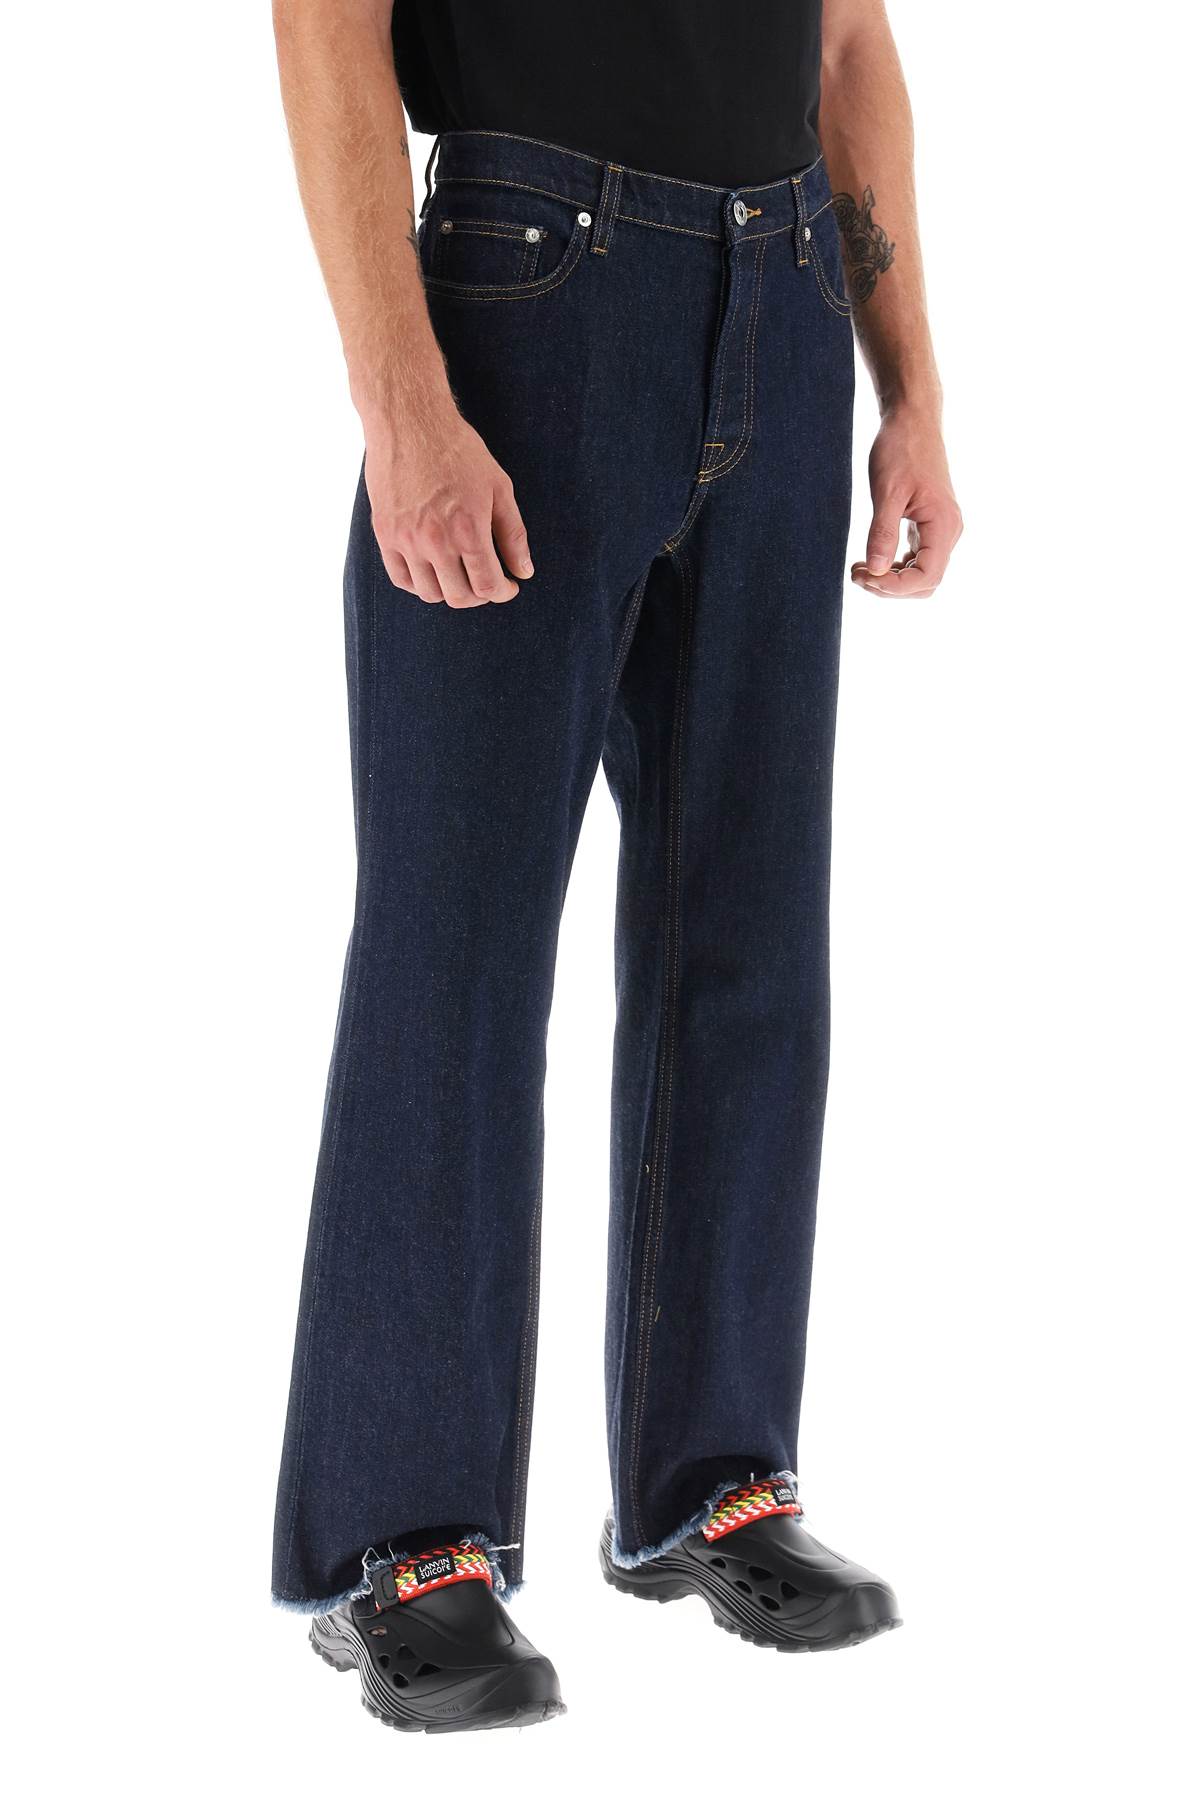 Lanvin jeans with frayed hem-1